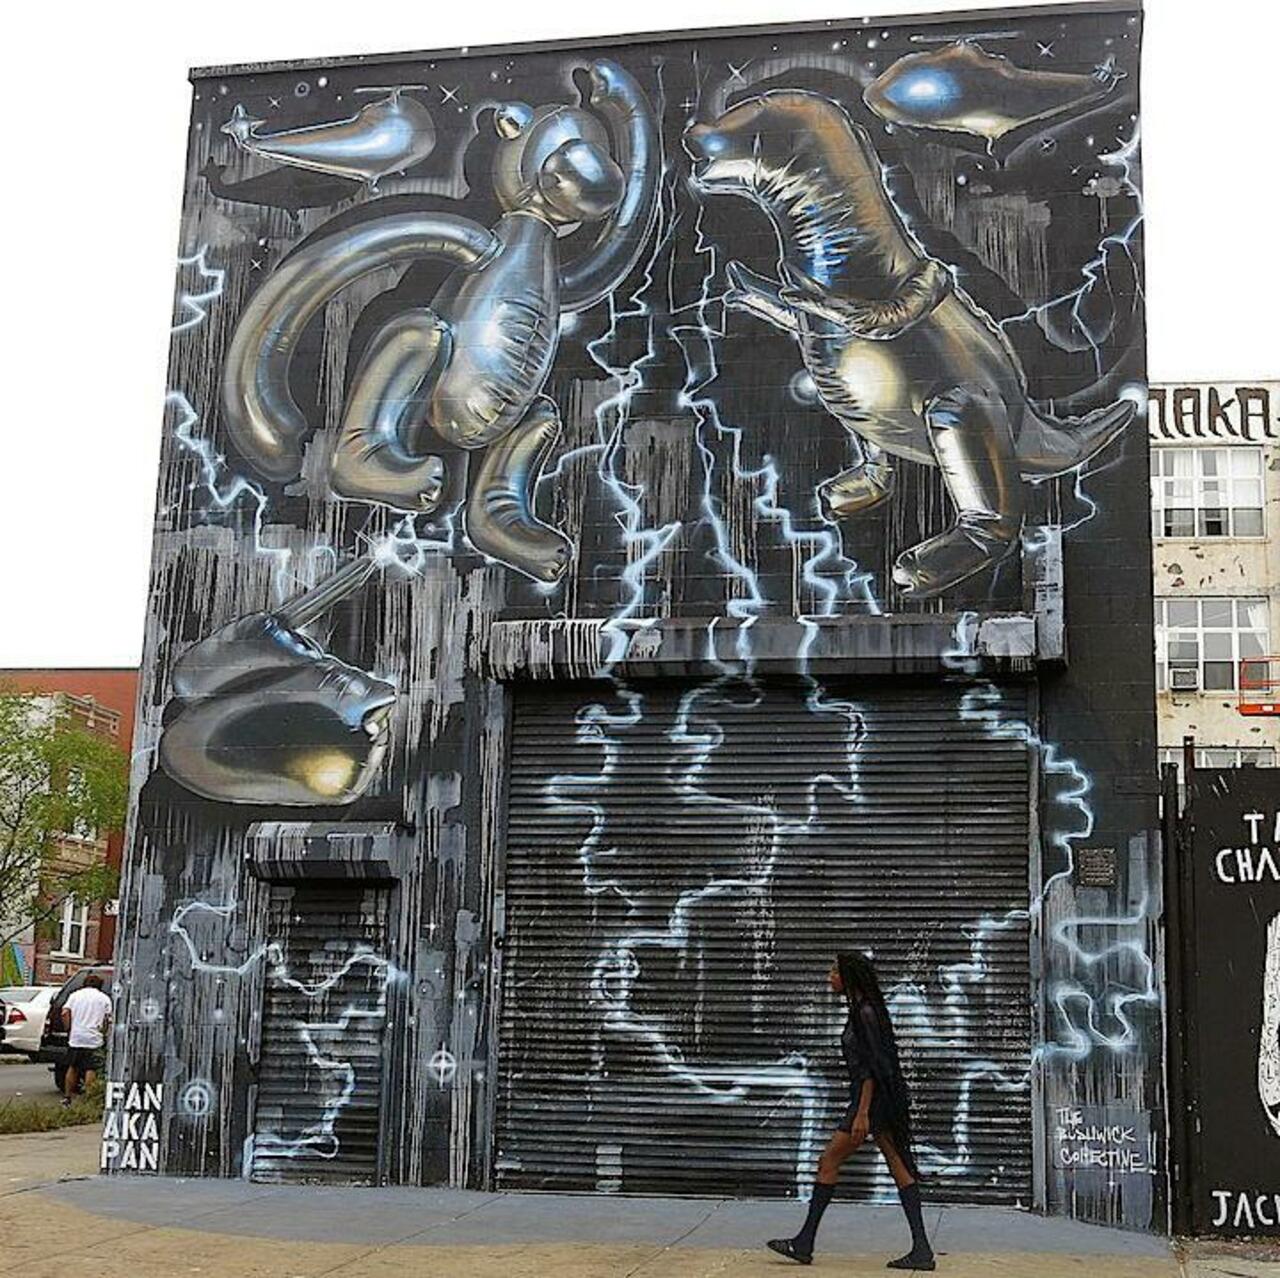 RT @city_z3n_0wl: #StreetArt NYC | Curious Characters on NYC Streets, Part VII
http://streetartnyc.org/blog/2015/10/01/curious-characters-on-nyc-streets-part-vii-fanakapan-bebar-telleache-pyramid-oracle-and-mr-nerds/
#urbanart #graffiti https://t.co/JK5zySKTOn